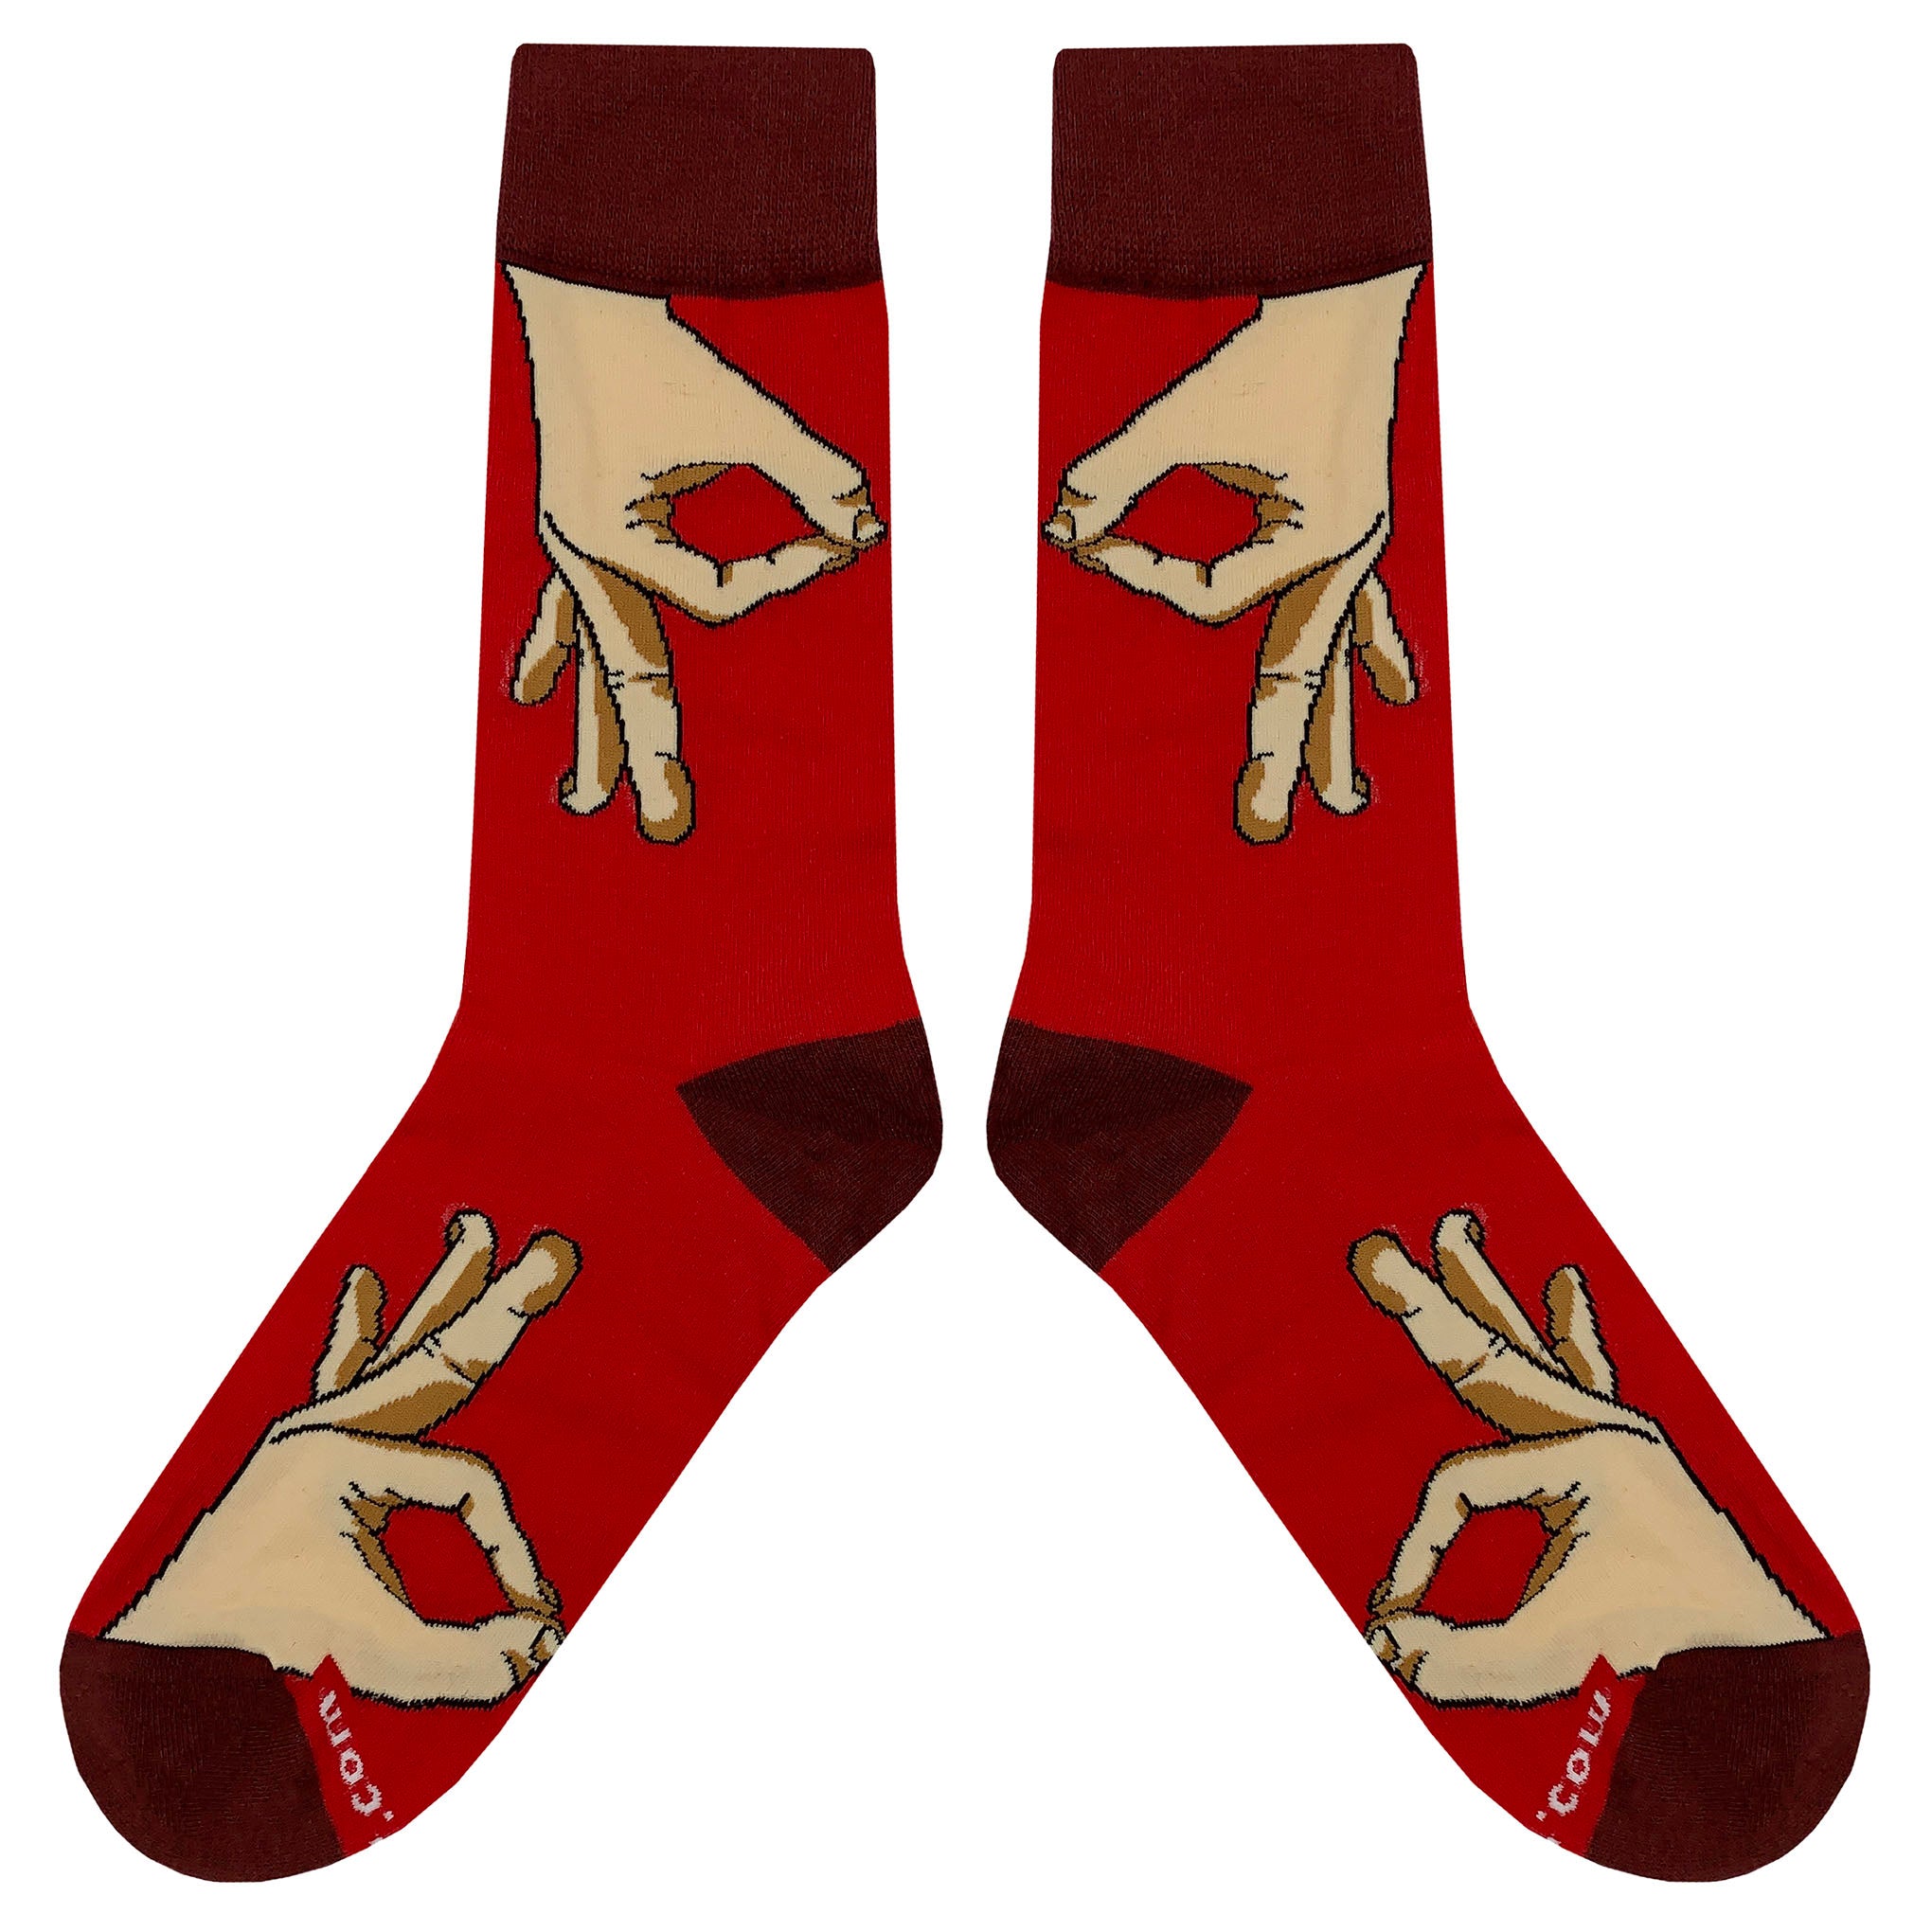 Got Em Red Socks - Fun and Crazy Socks at Sockfly.com